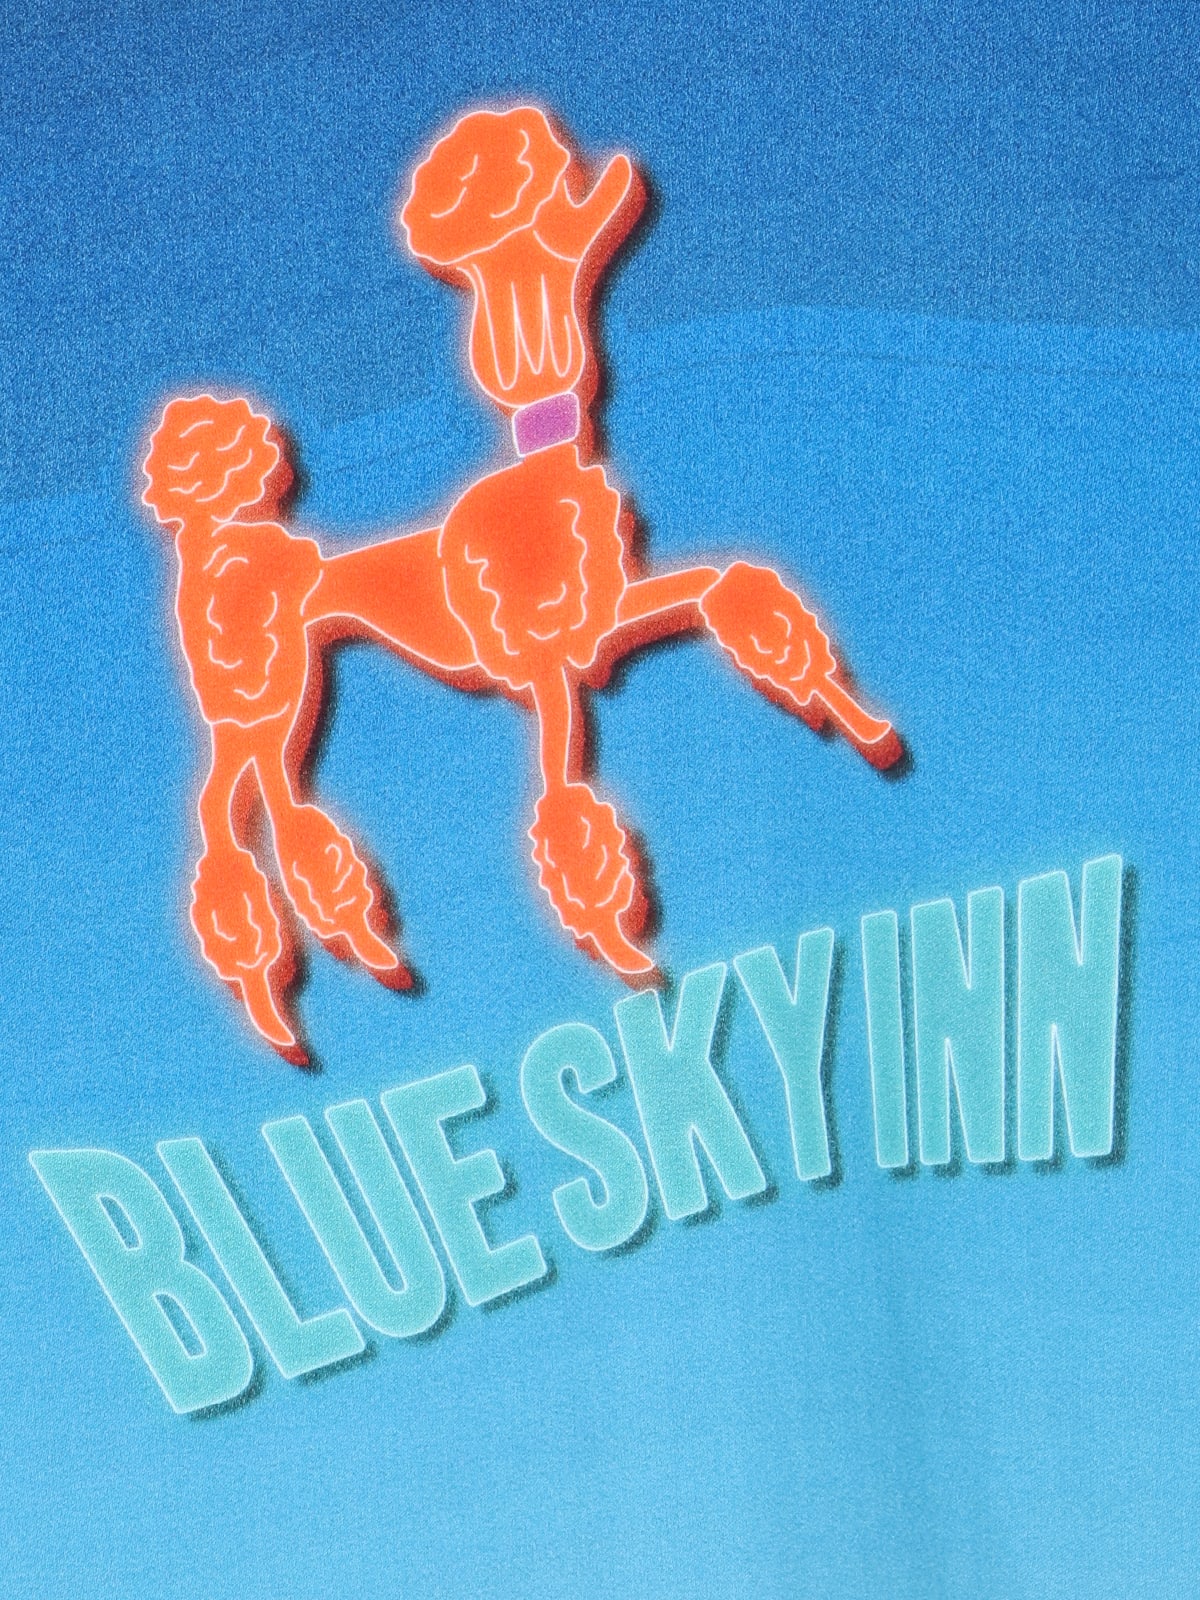 Shop Blue Sky Inn Printed Shirt In Light Blue